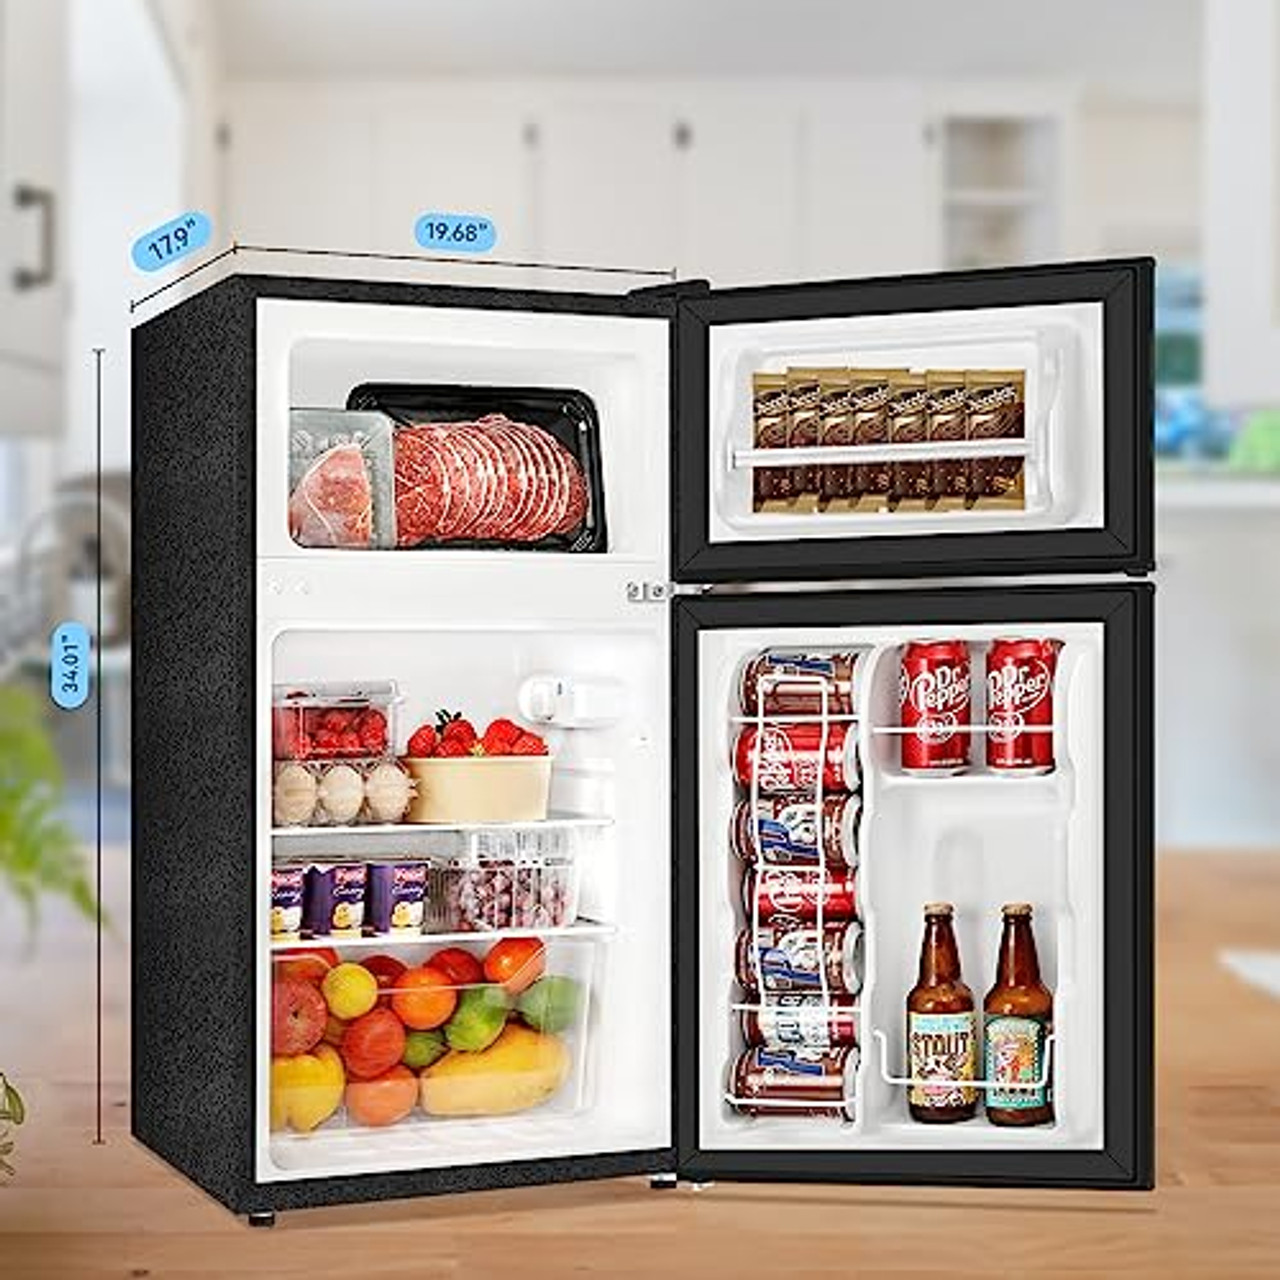  3.2 CU.FT. Mini Dorm Refrigerator Compact Fridge Small Fridge  with Freezer for Home Office Bedroom Dorm,Low Noise,Adjustable  Temperature,Reversible Door,Black : Home & Kitchen